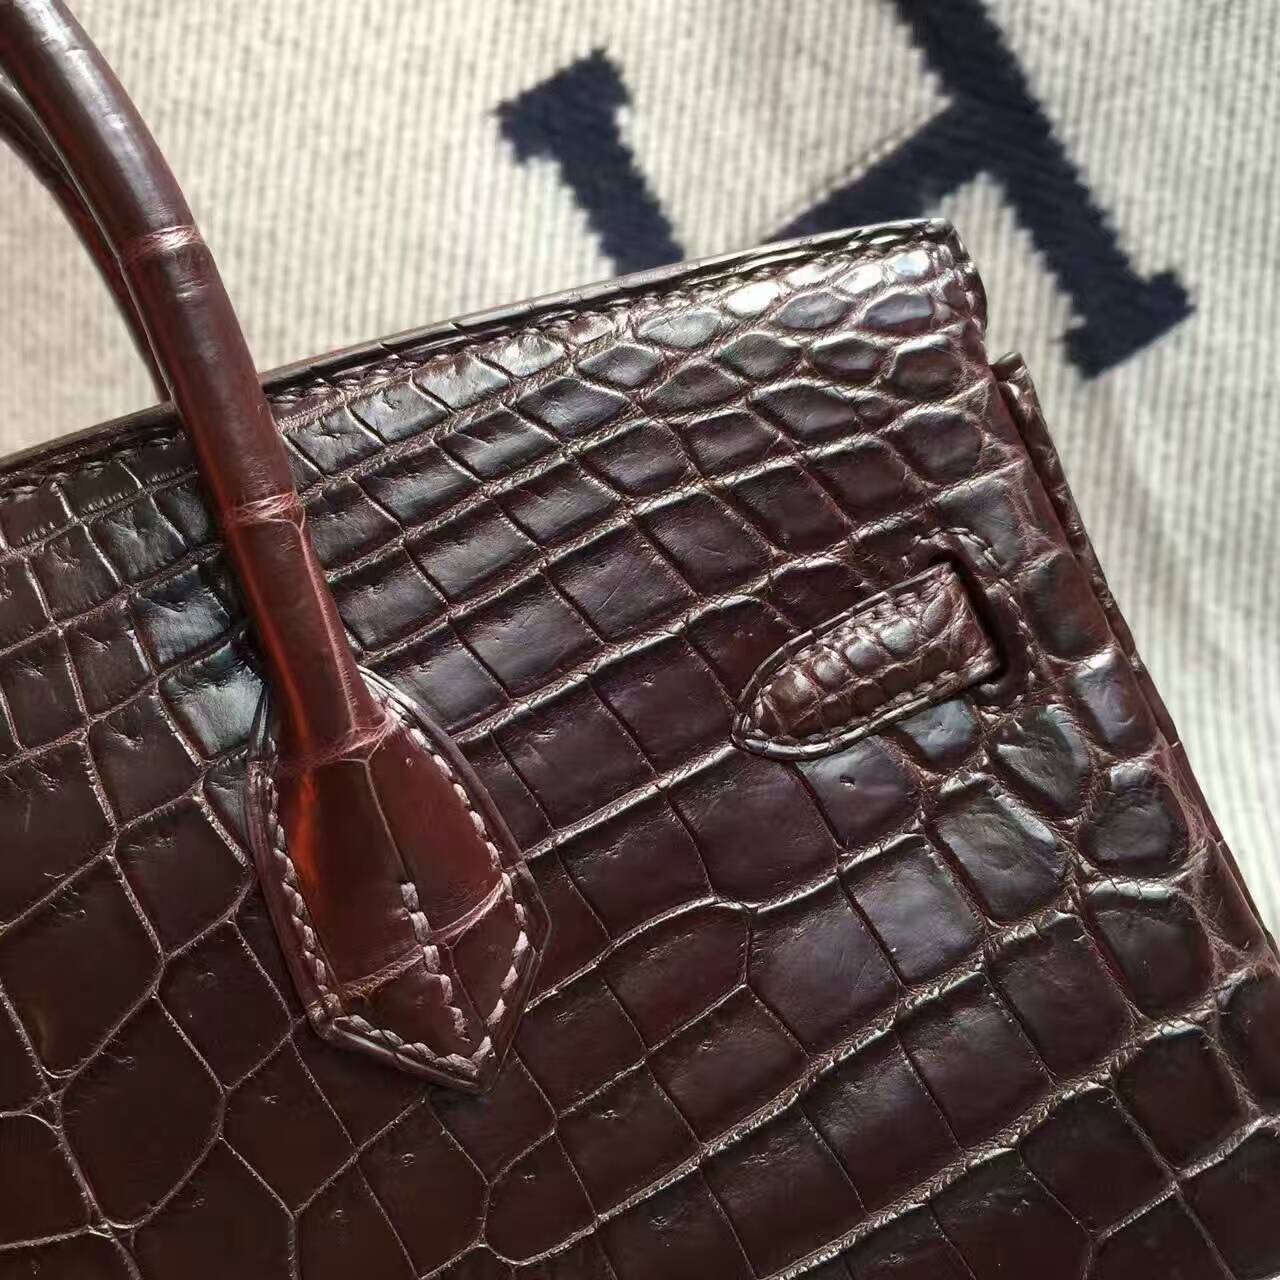 Sale Hermes Crocodile Matt Leather Birkin Bag 25cm in Chocolate Color